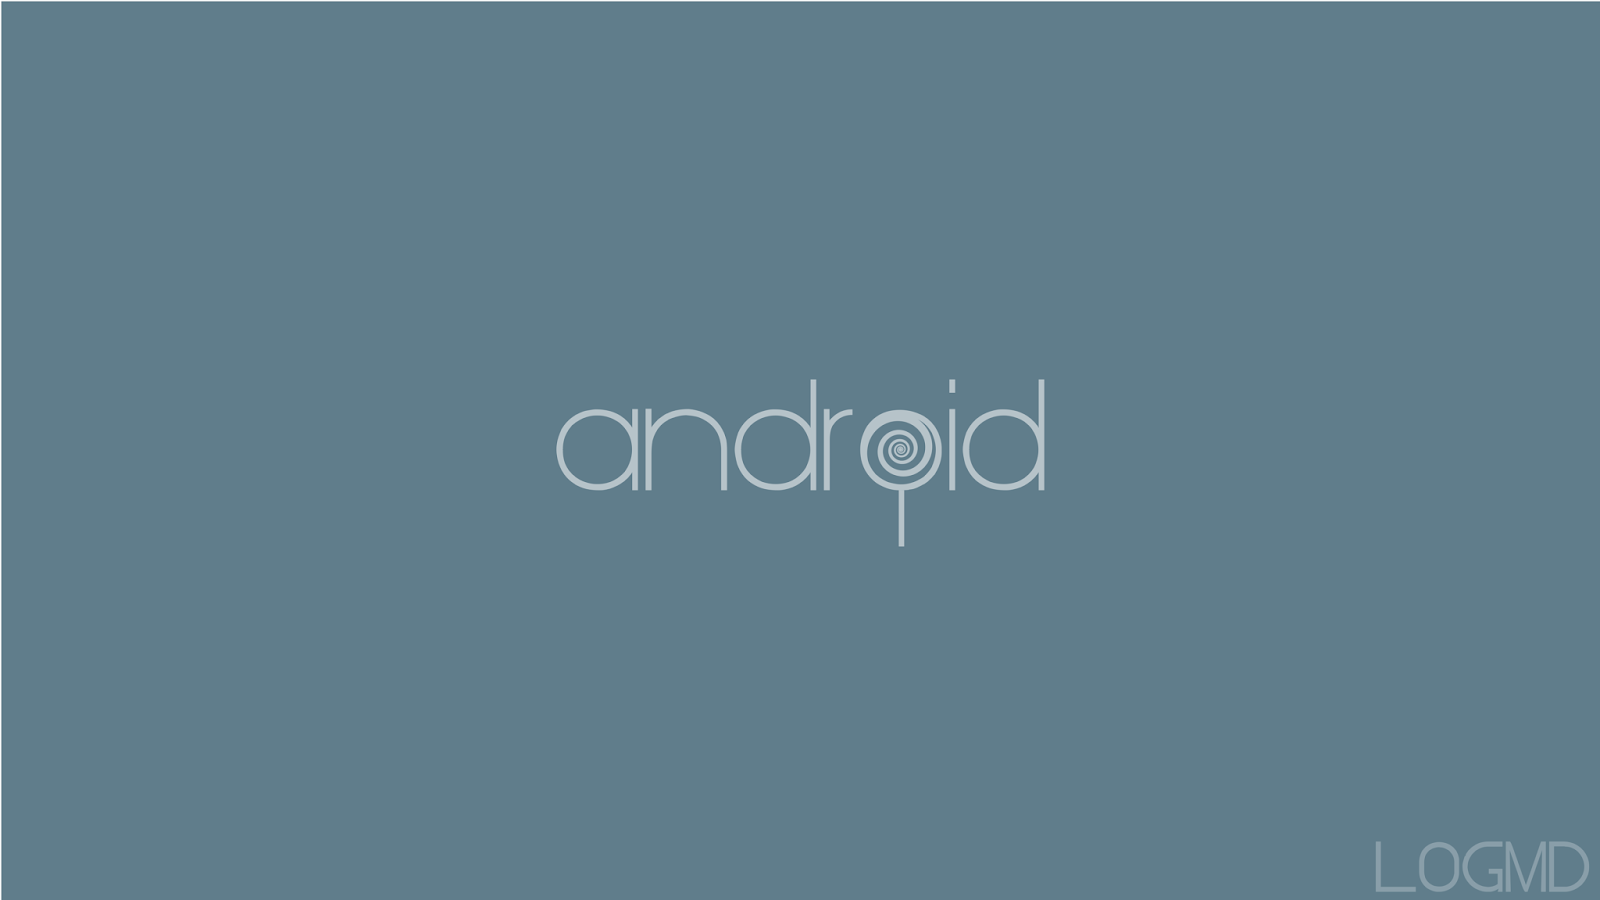 LOGMD: LOGMD Android 5.0 Lollipop Material Design Wallpaper Set!